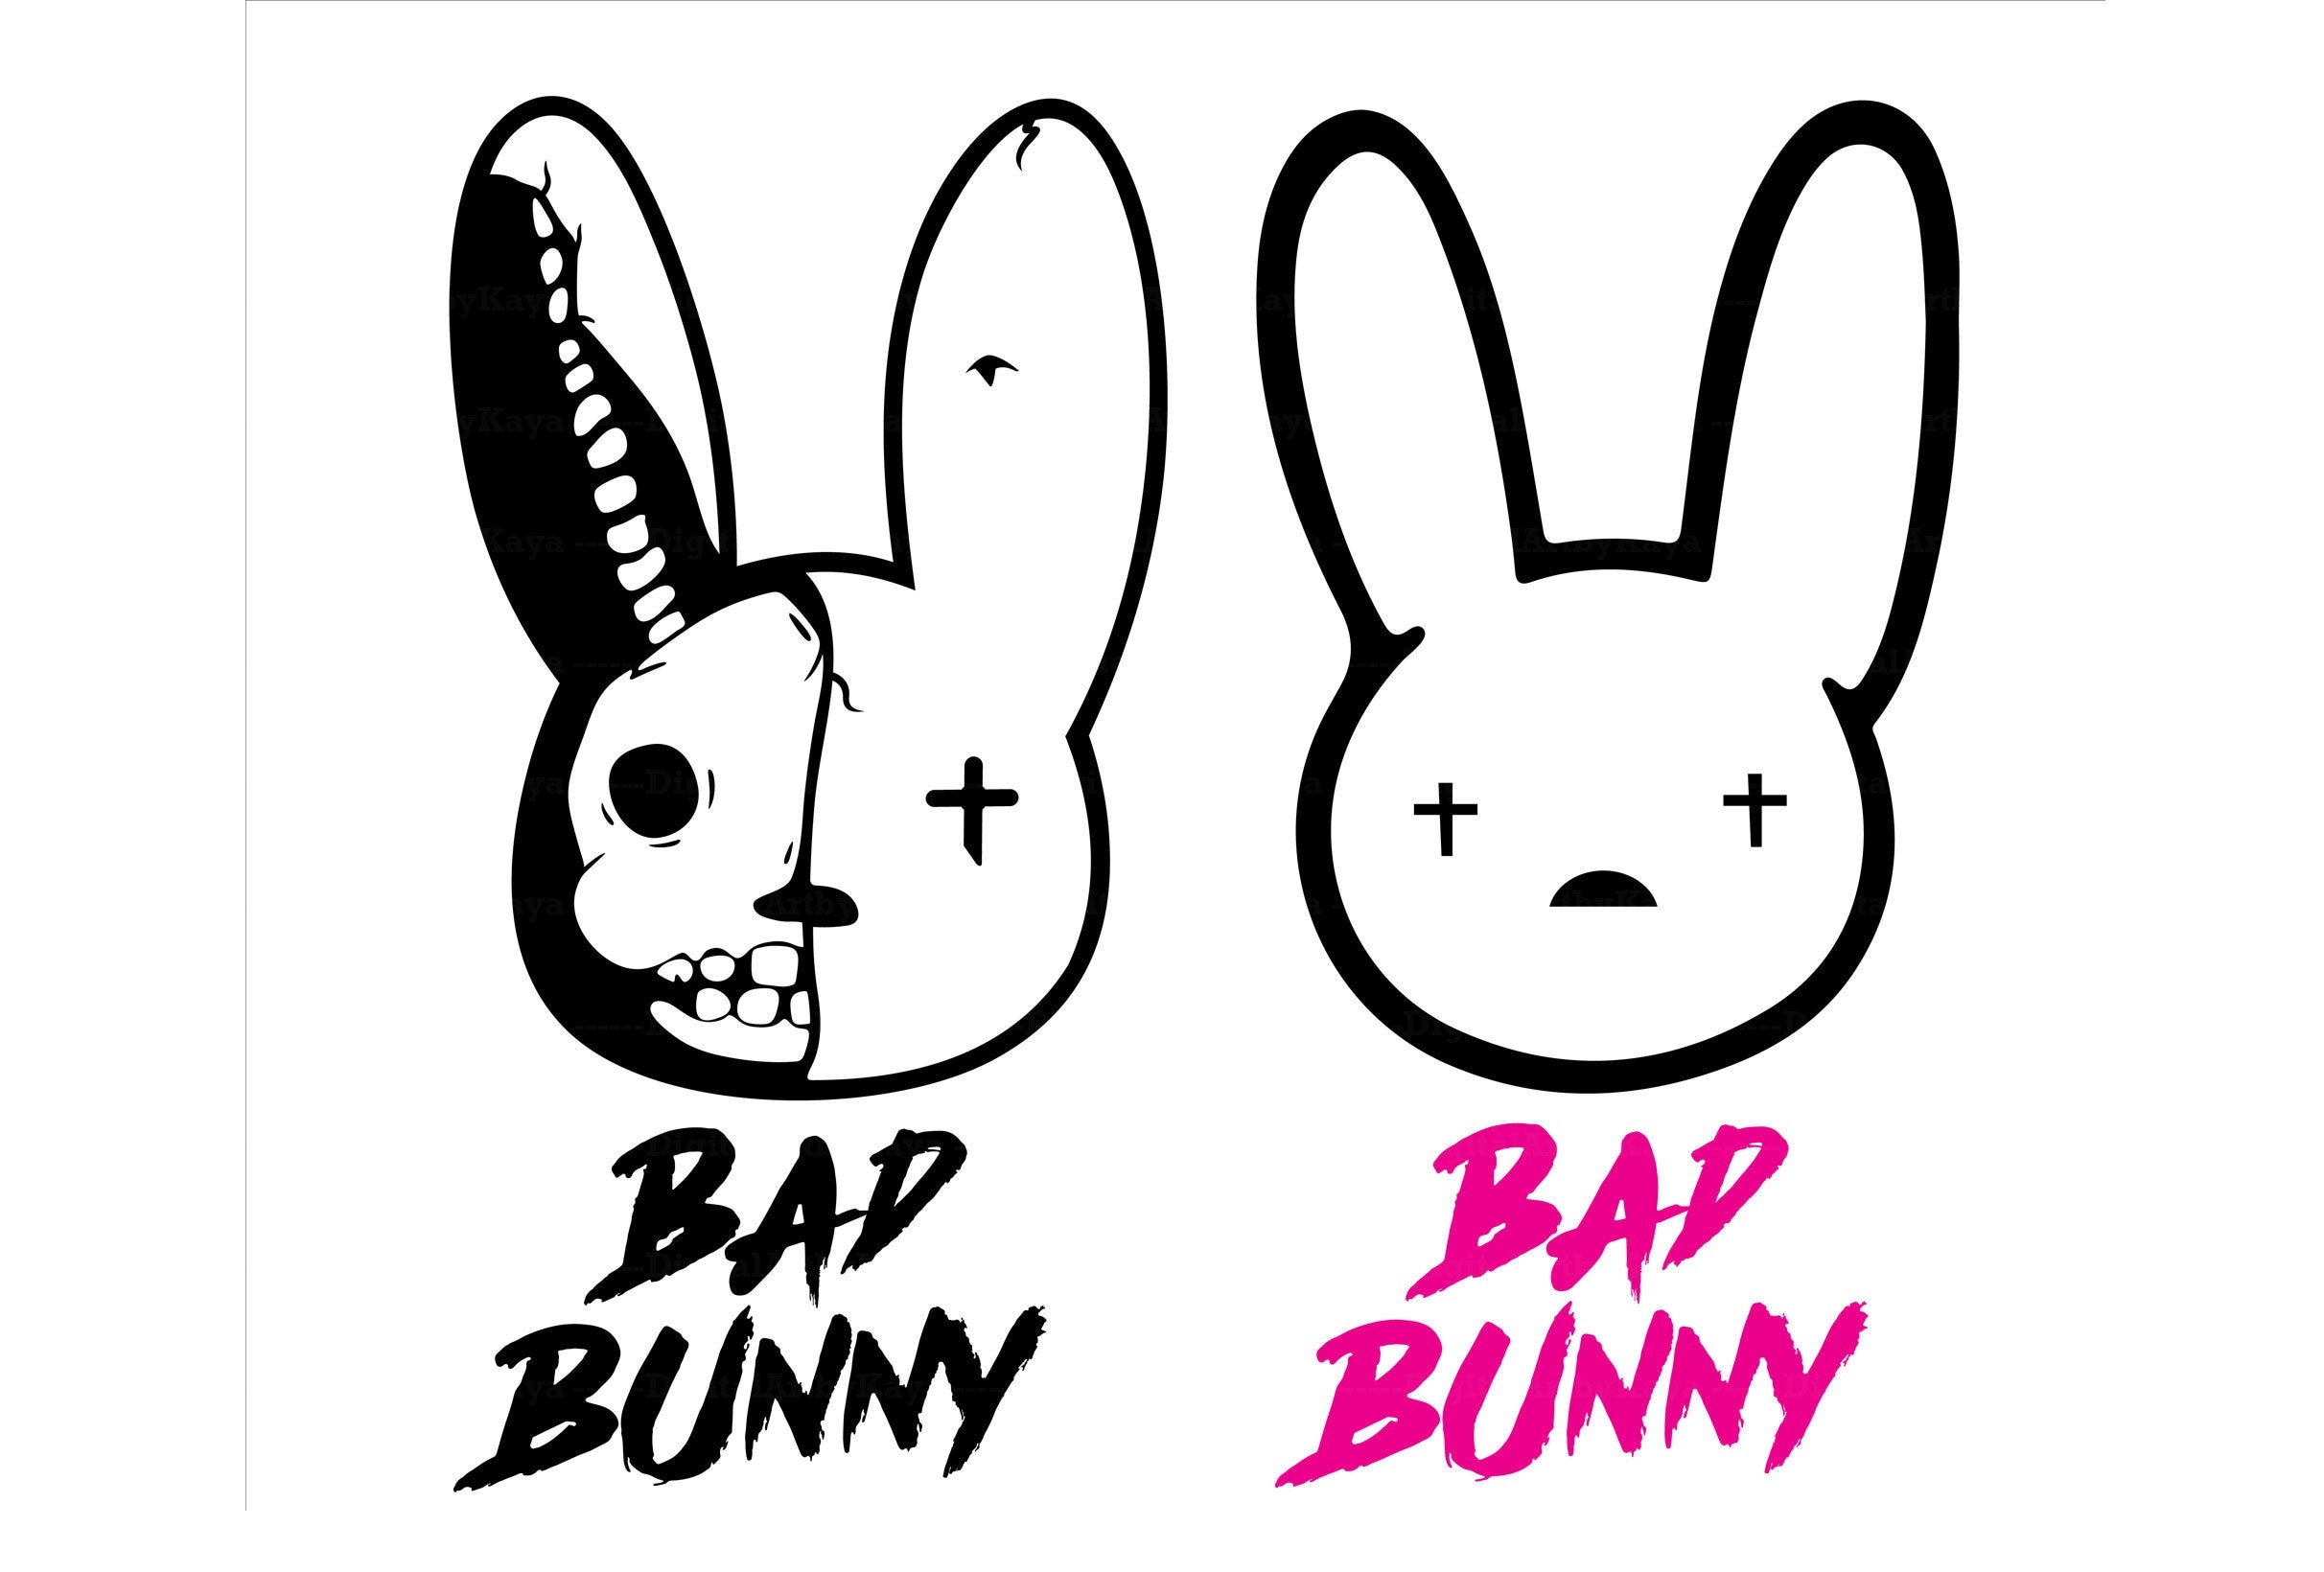 Bad Bunny Coloring Pages Printable Pdf - Bad Bunny Coloring Pages Printable